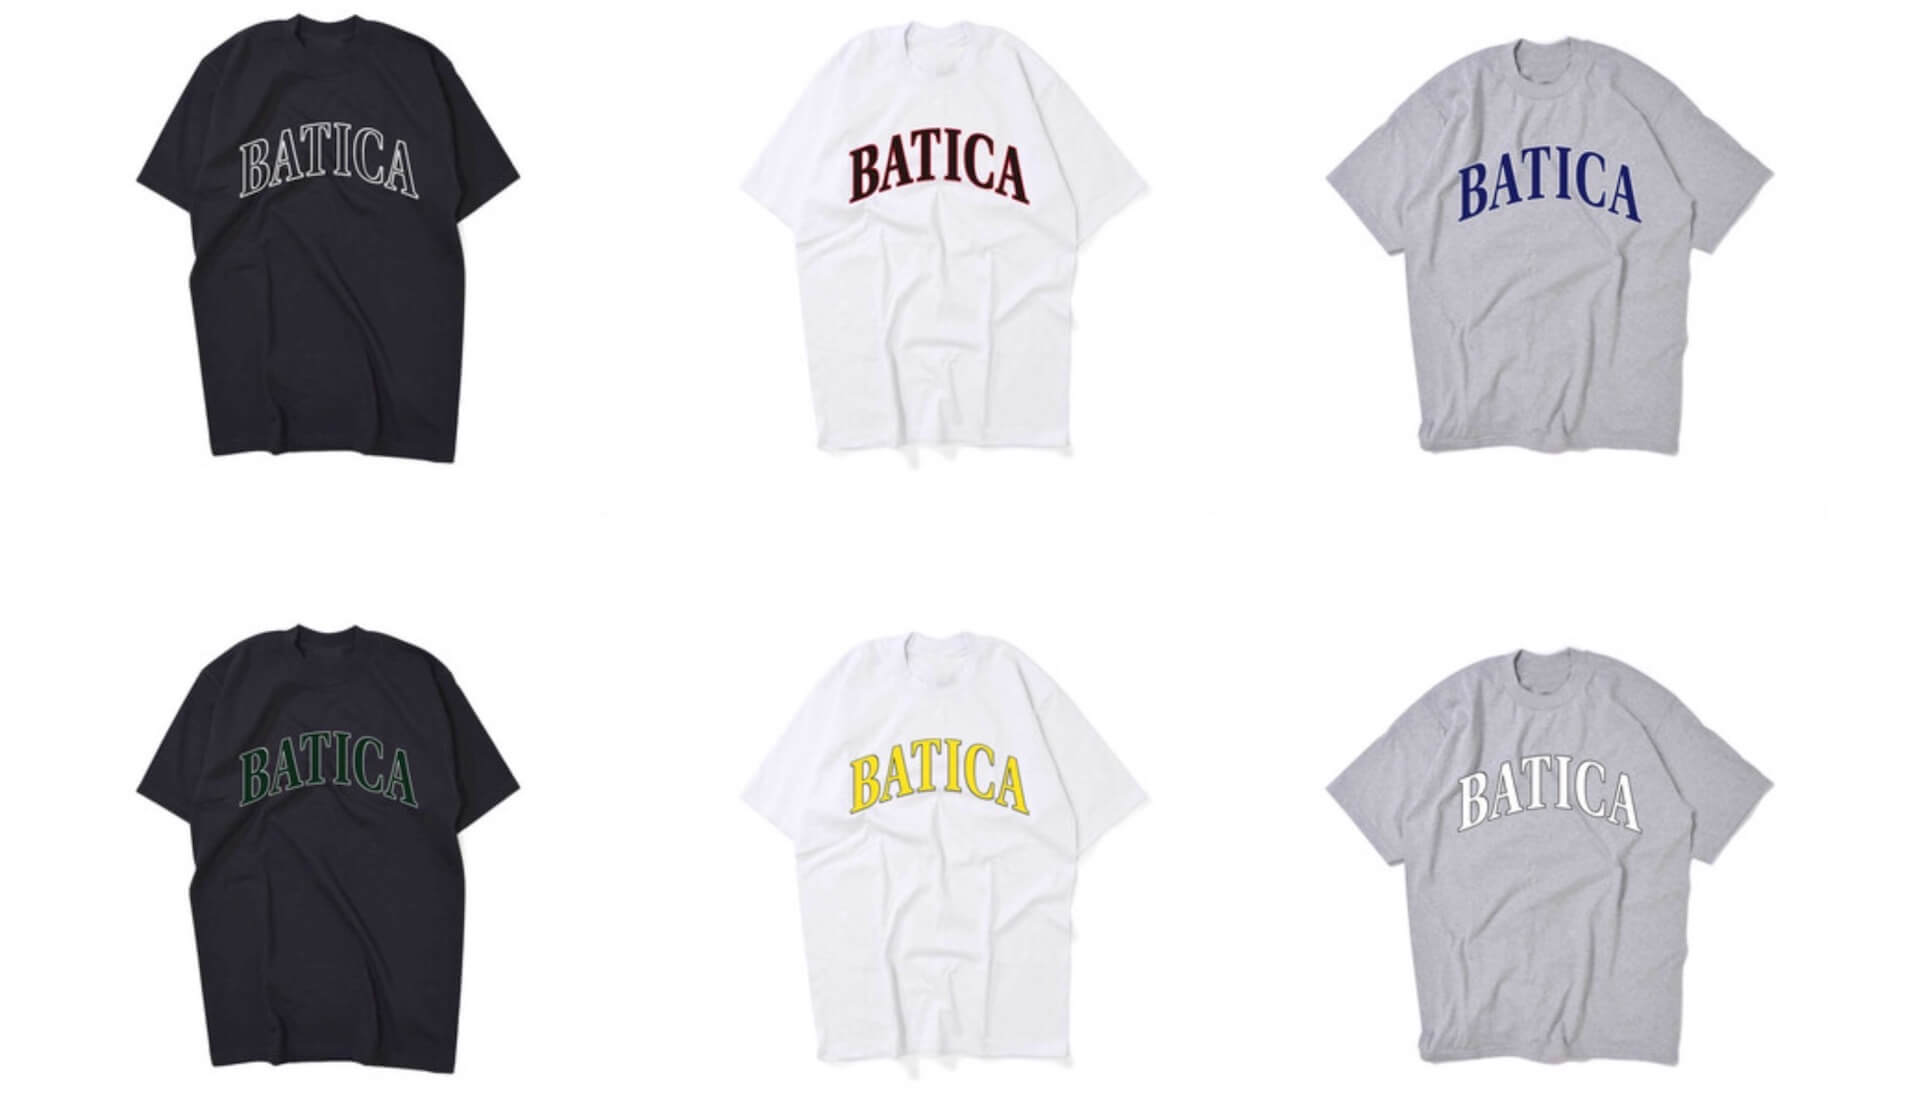 EBISU BATICAの新アパレルプロジェクト“CARTEL WEAR”が始動｜本日よりTシャツ6色が販売開始 life200920_batica_tshirt_9